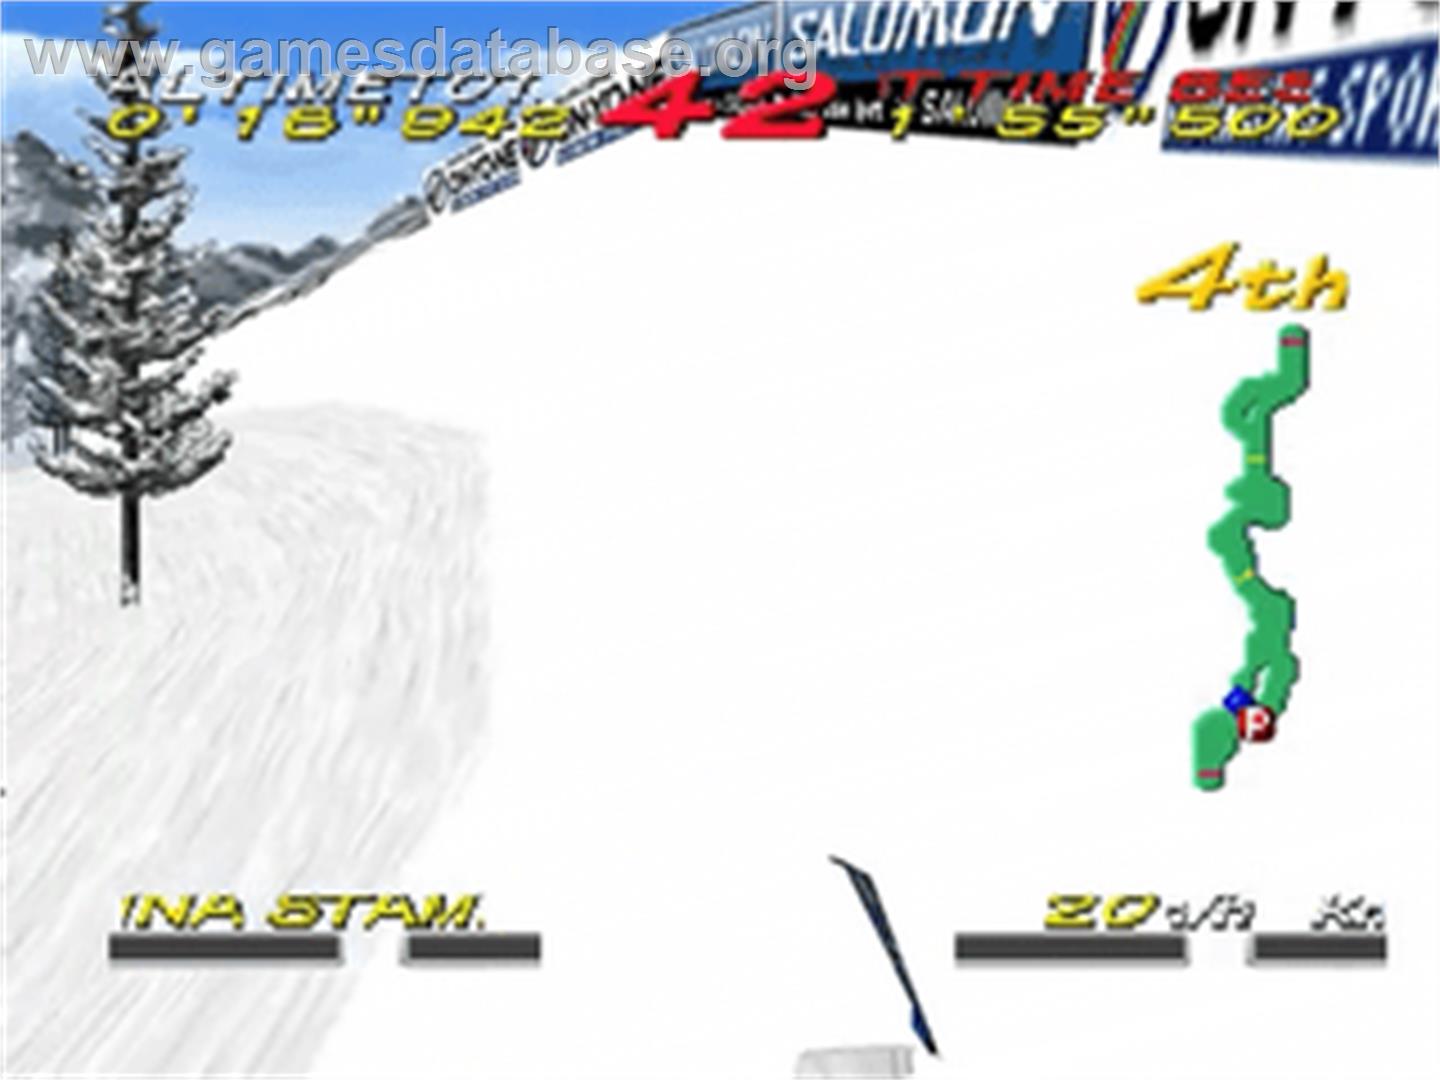 Big Mountain 2000 - Nintendo N64 - Artwork - In Game